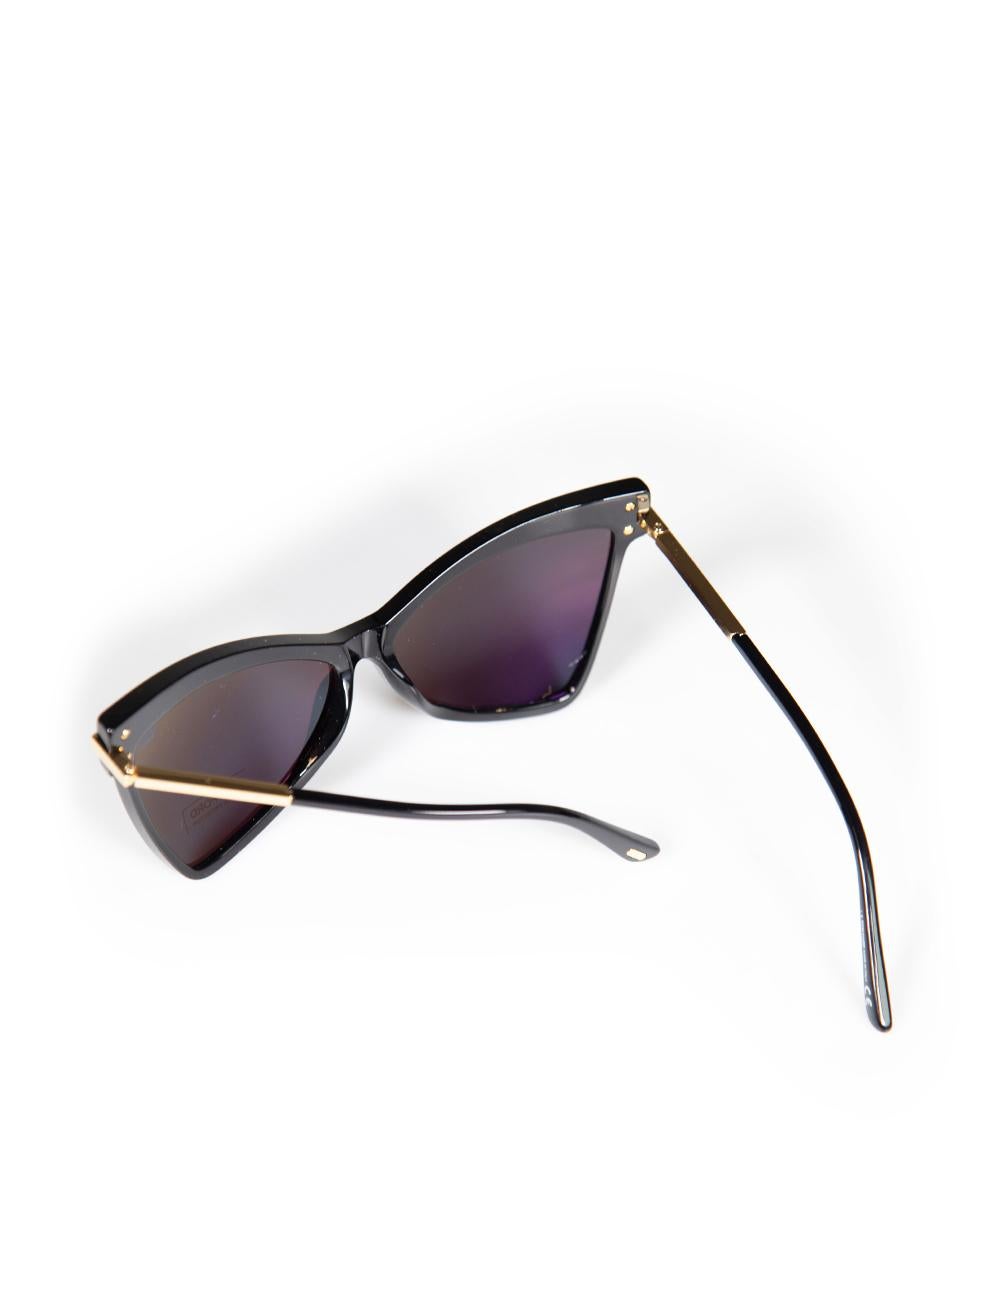 Tom Ford Tallulah Shiny Black Butterfly Sunglasses 3